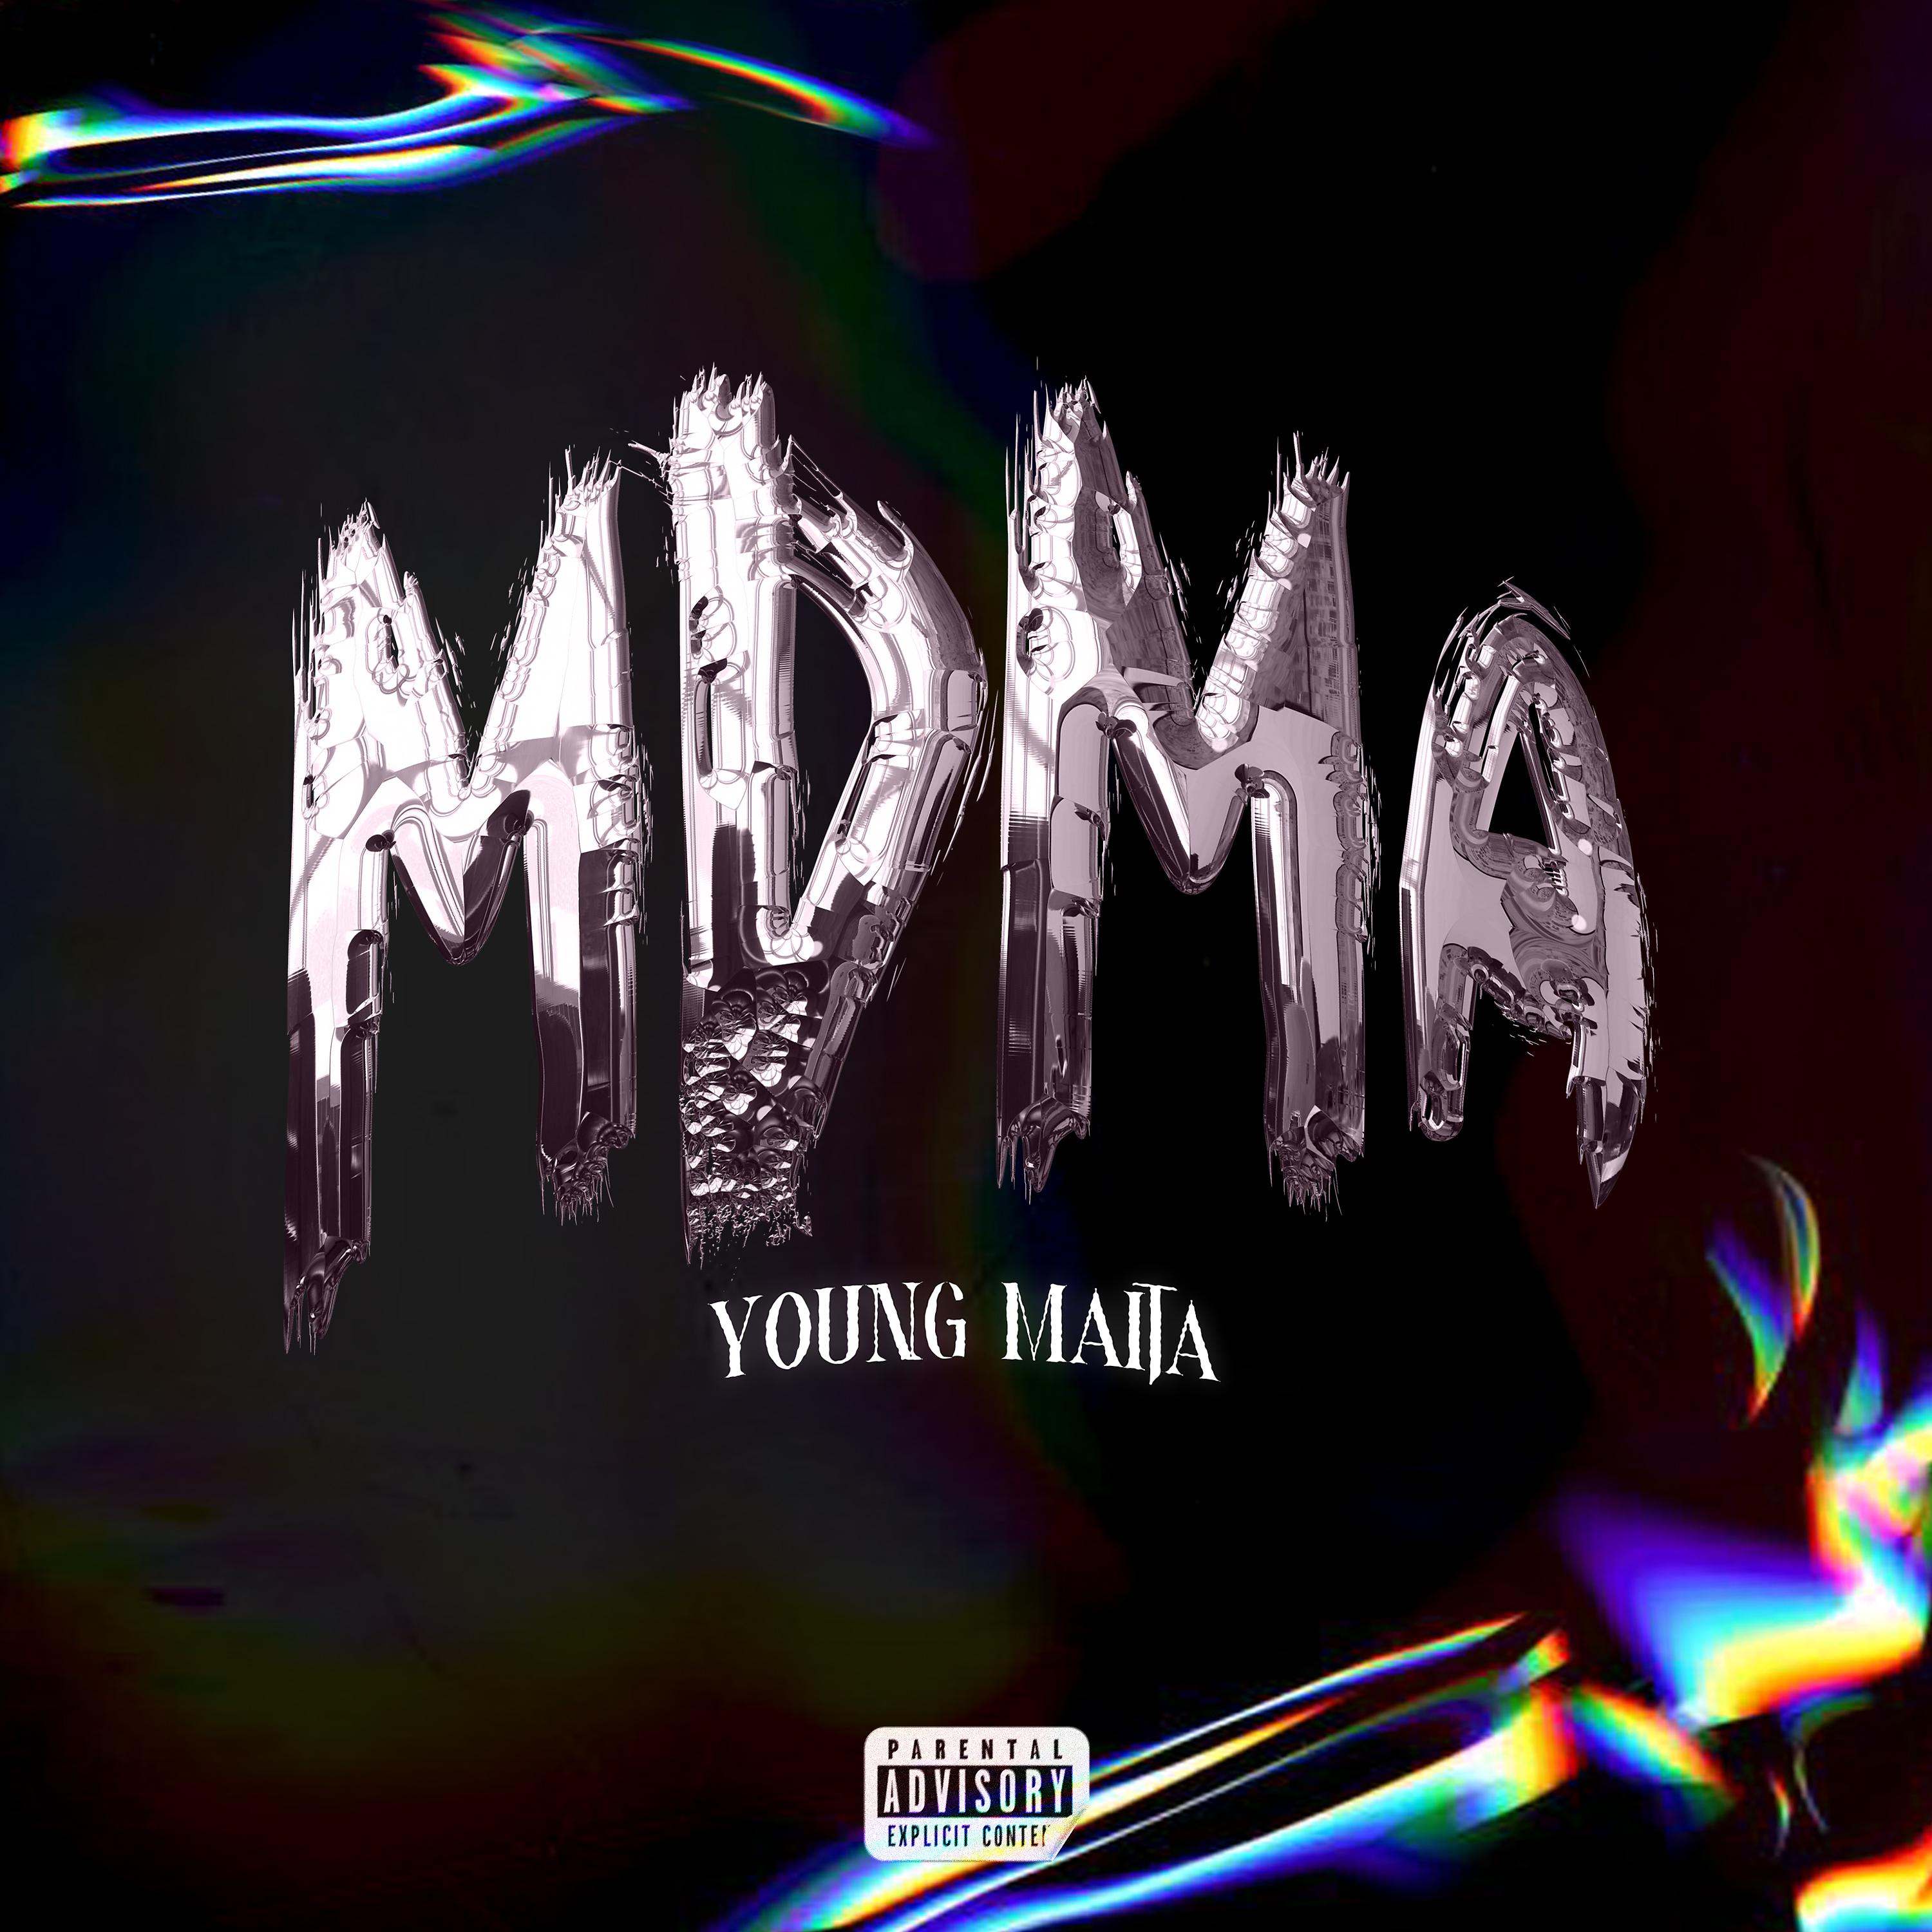 Постер альбома Mdma